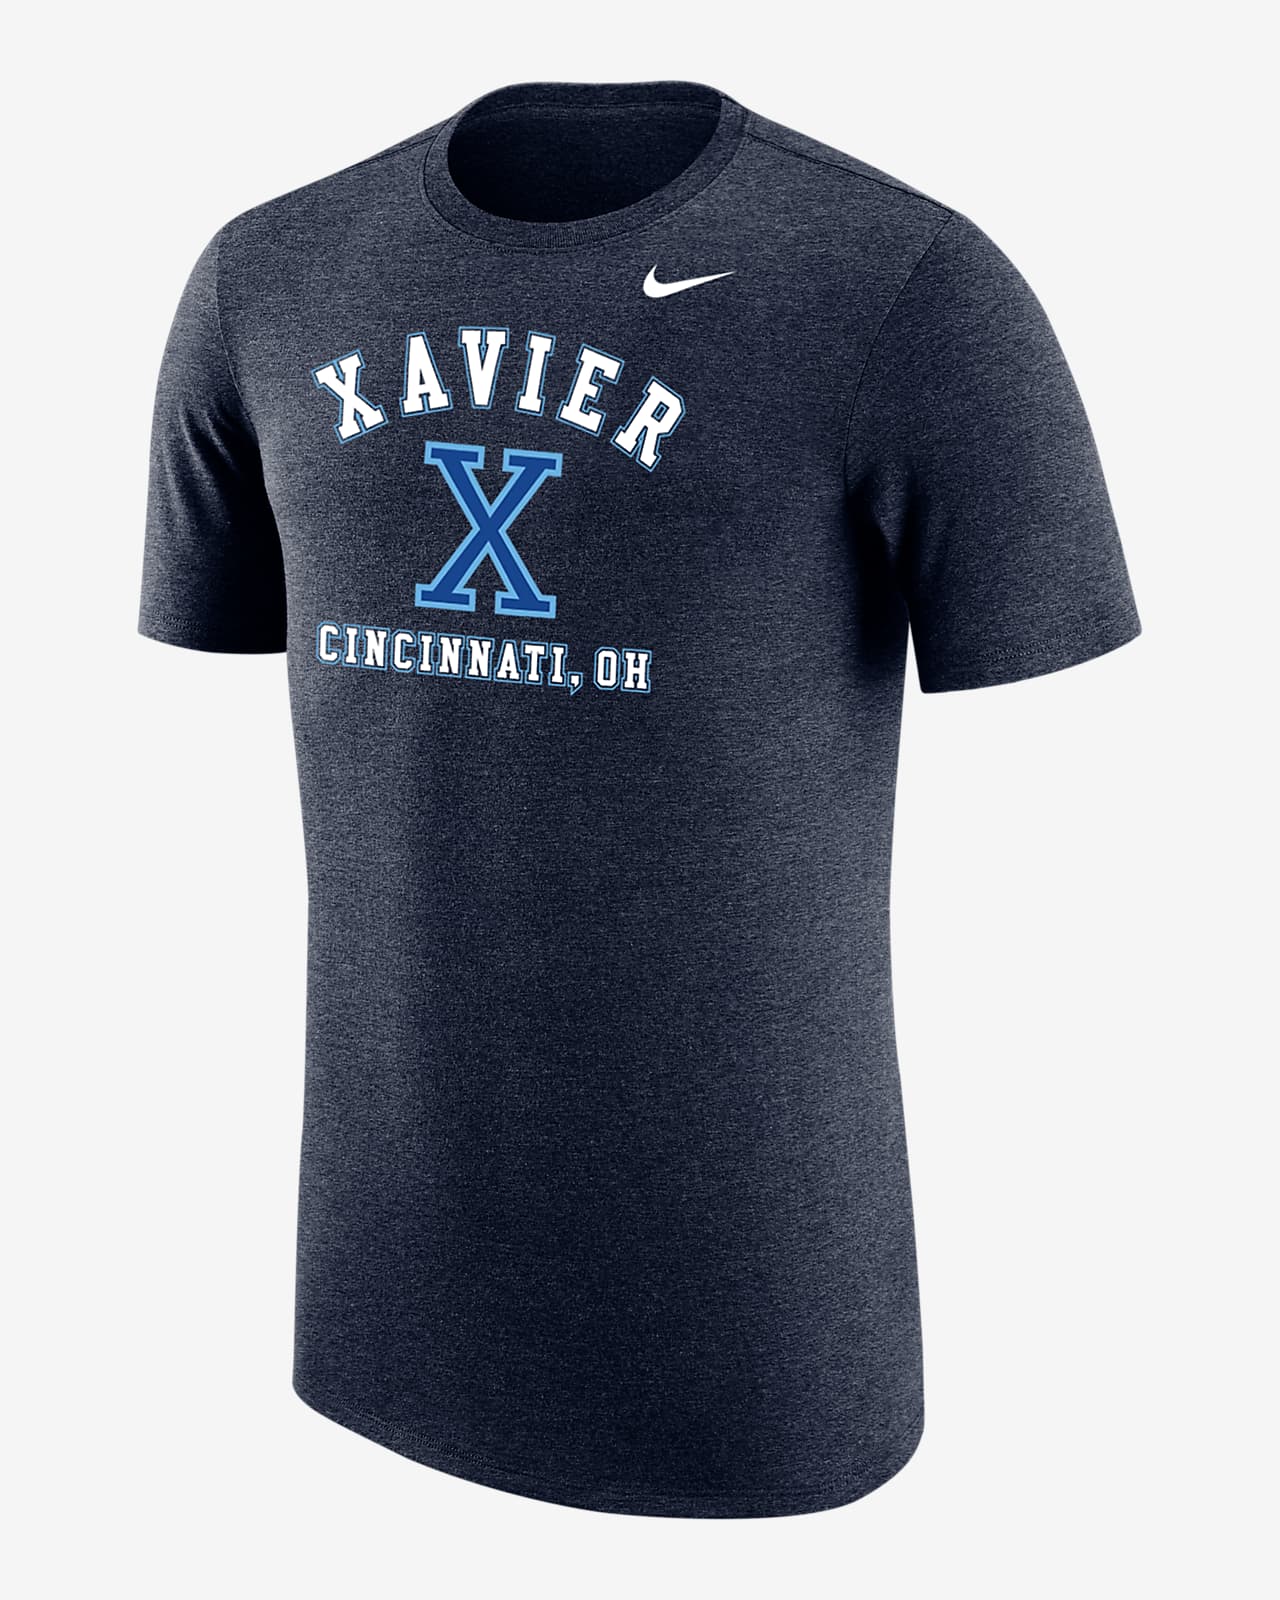 Xavier Men's Nike College T-Shirt